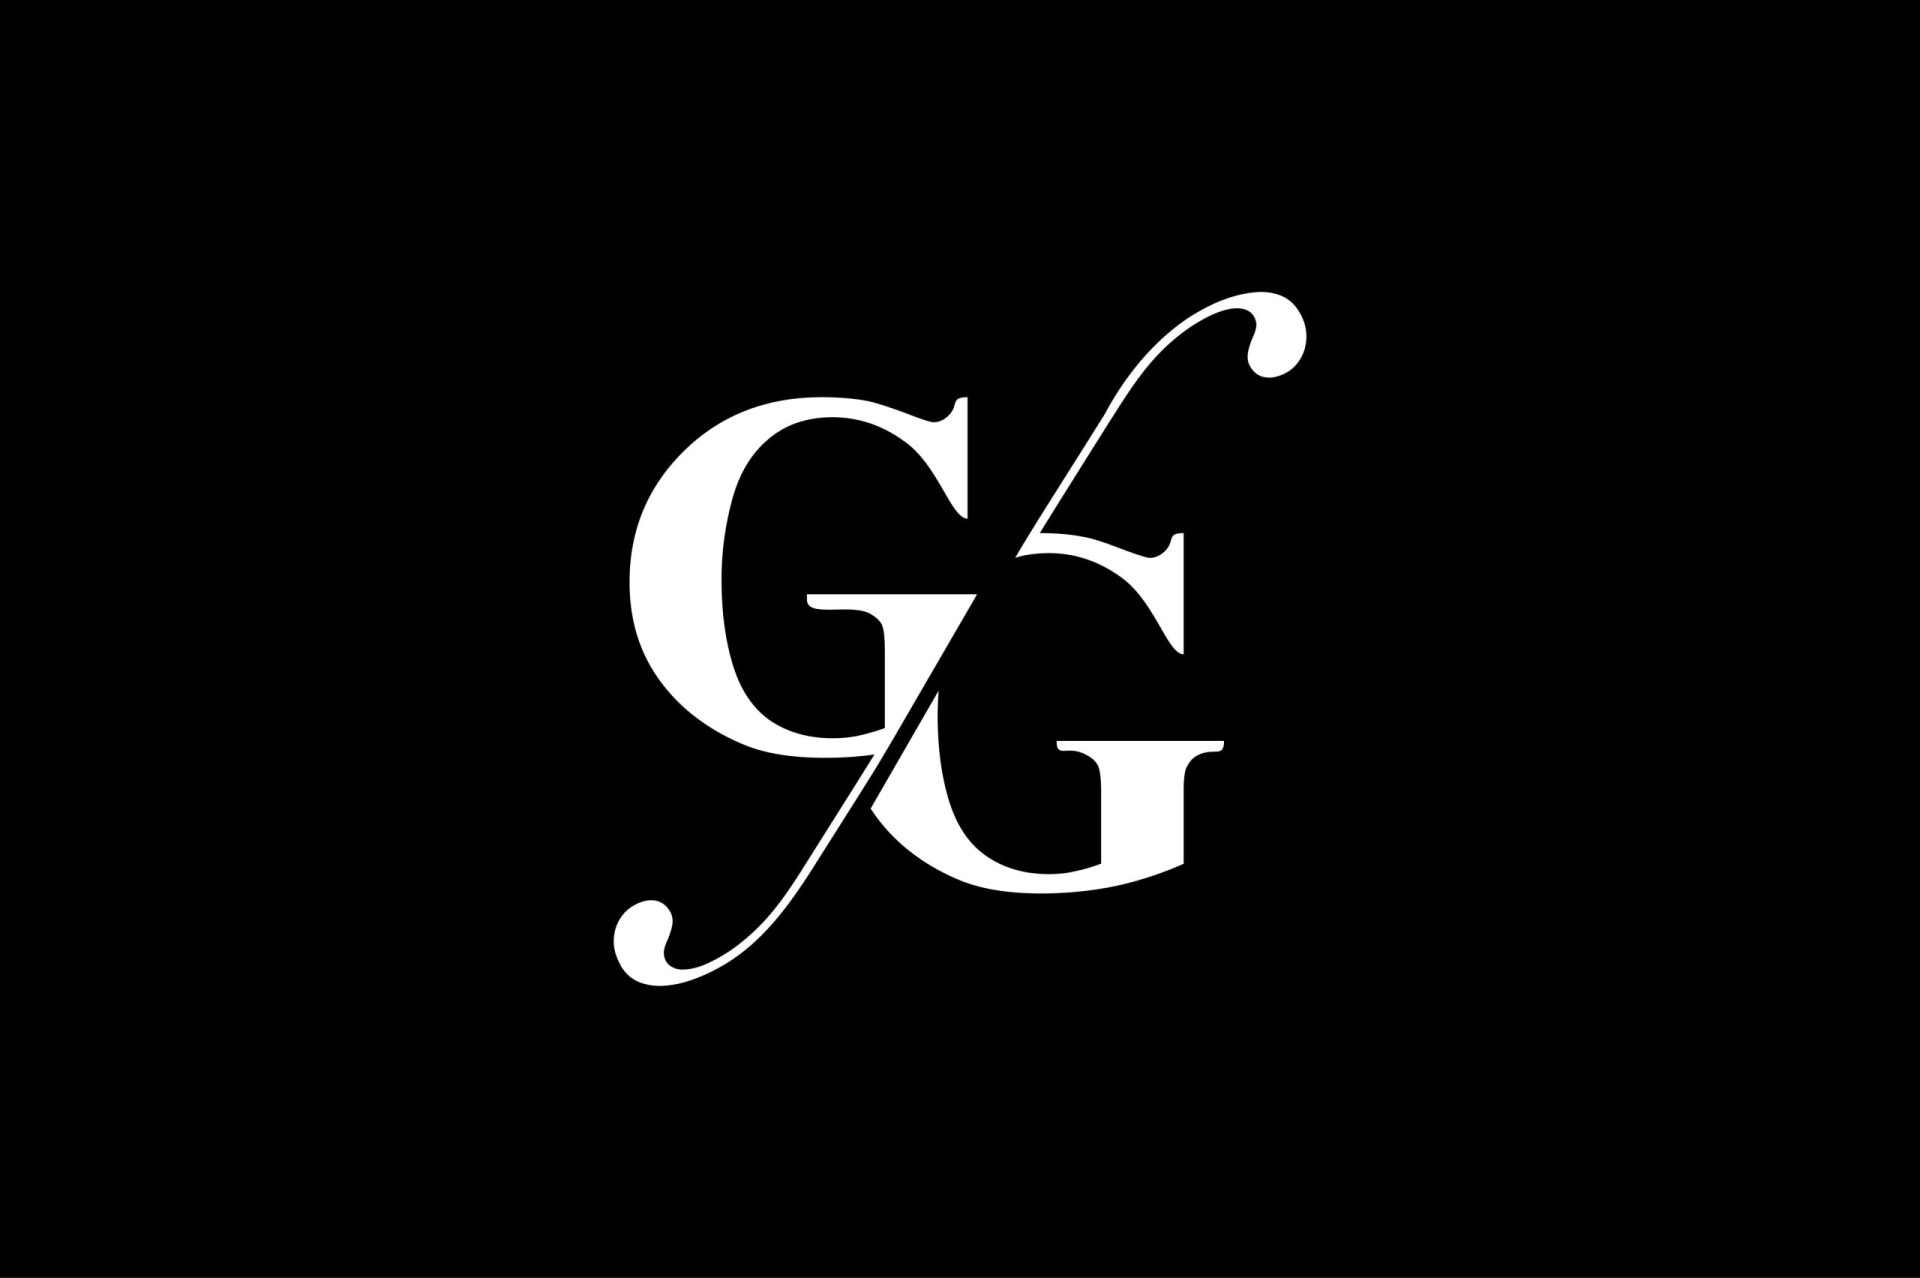 double g logo ideas 6